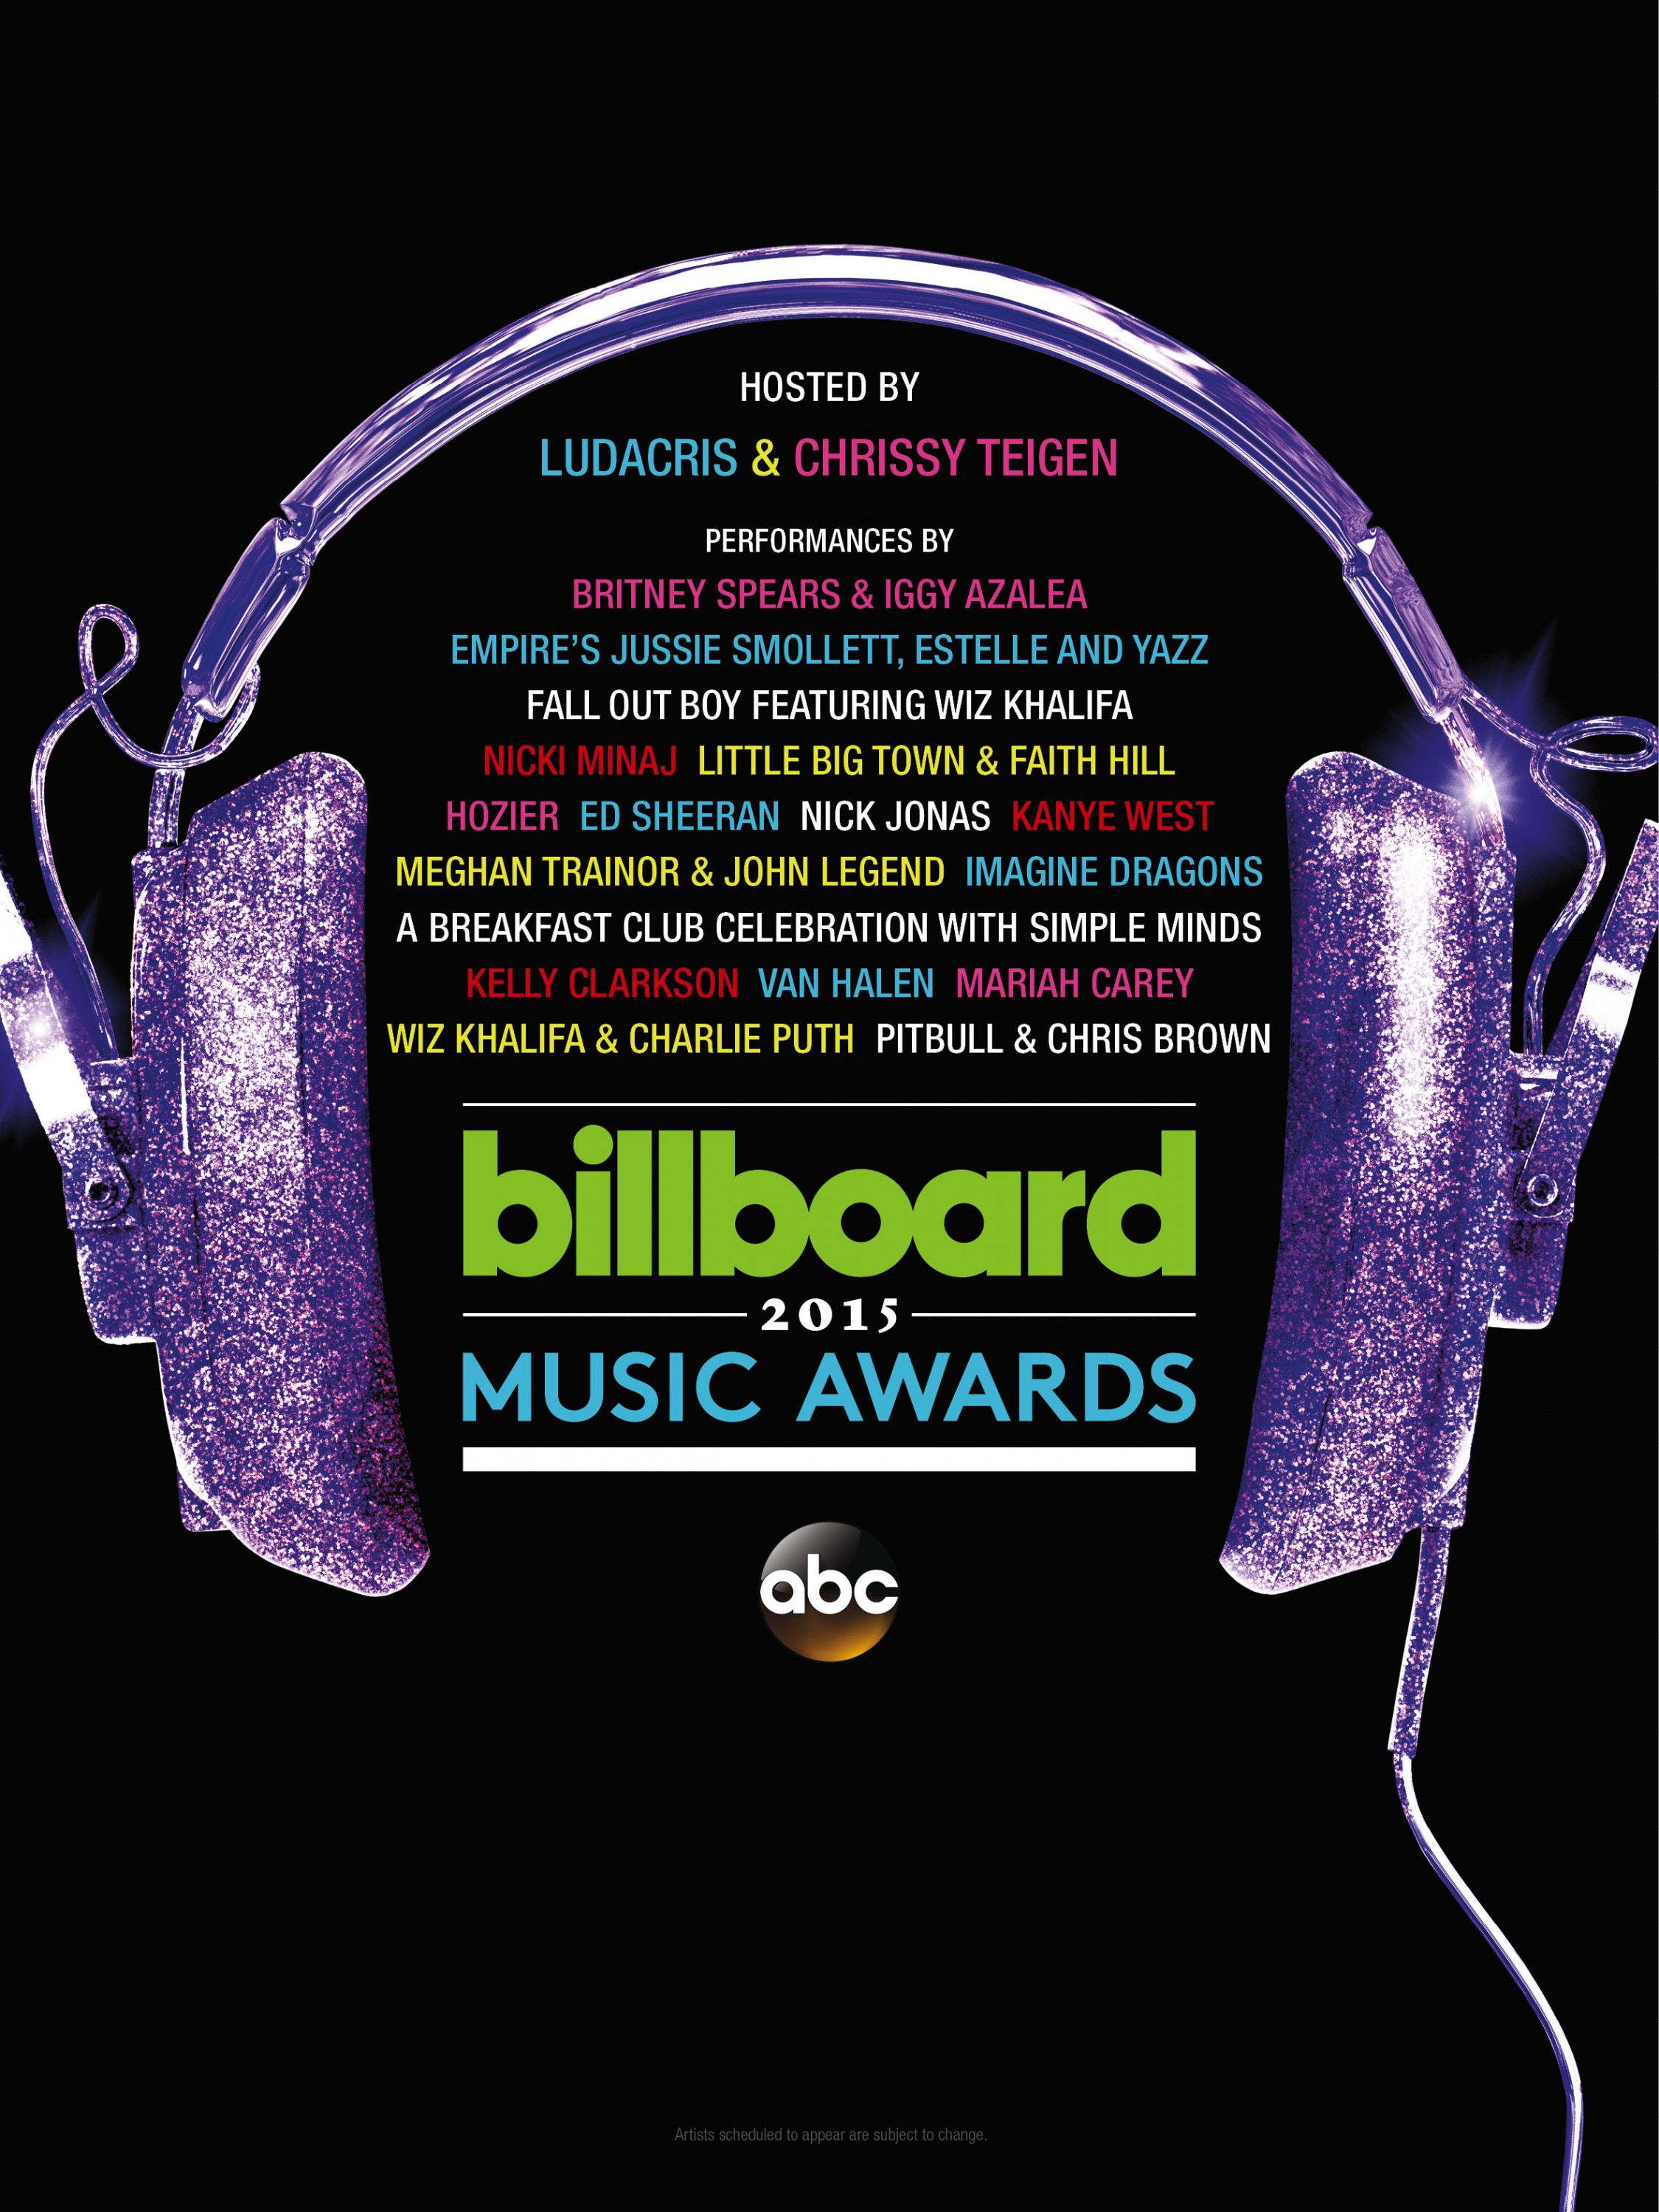 Mega Sized TV Poster Image for 2015 Billboard Music Awards (#6 of 7)